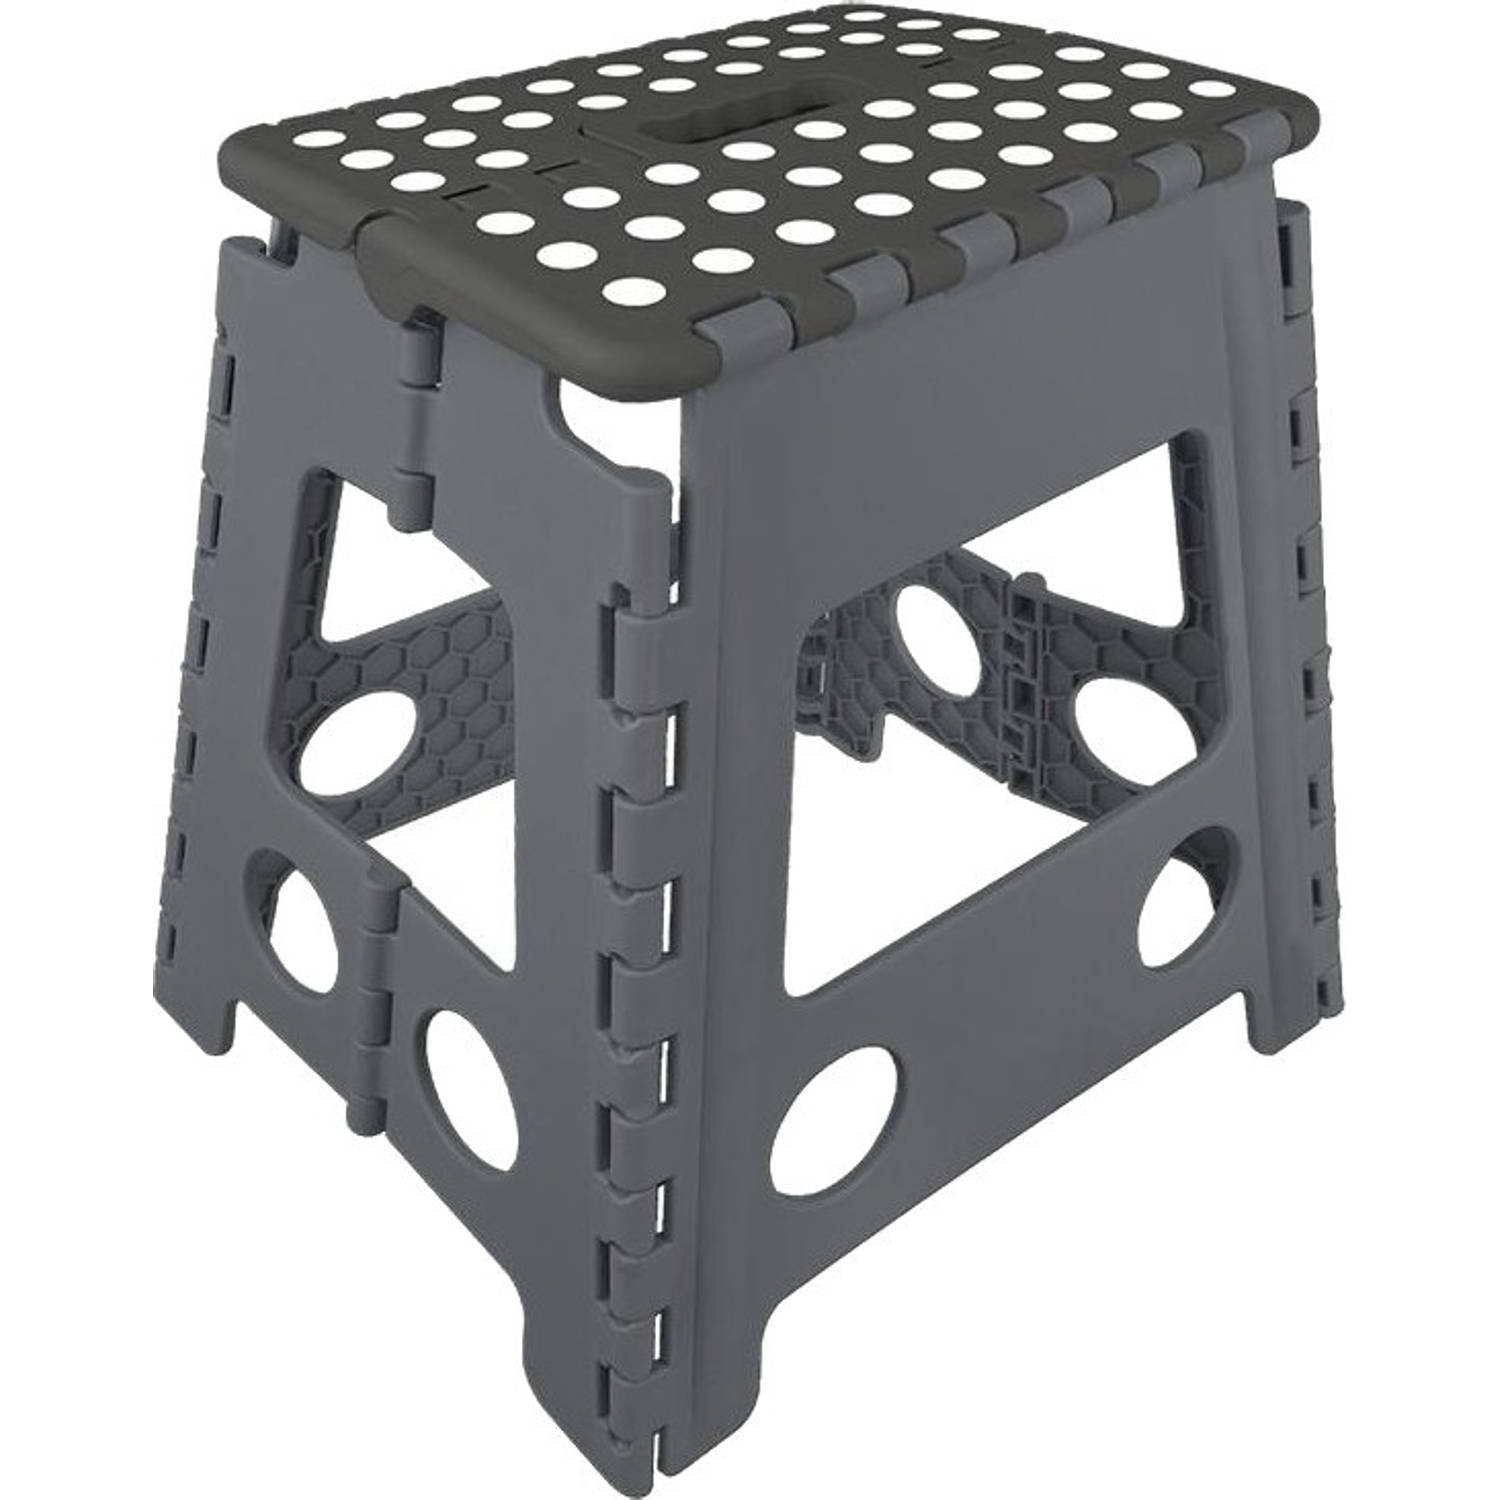 Bende martelen legering ProPlus opvouwbaar opstapje zwart/grijs 29 x 21,5 x 39,5 cm | Blokker